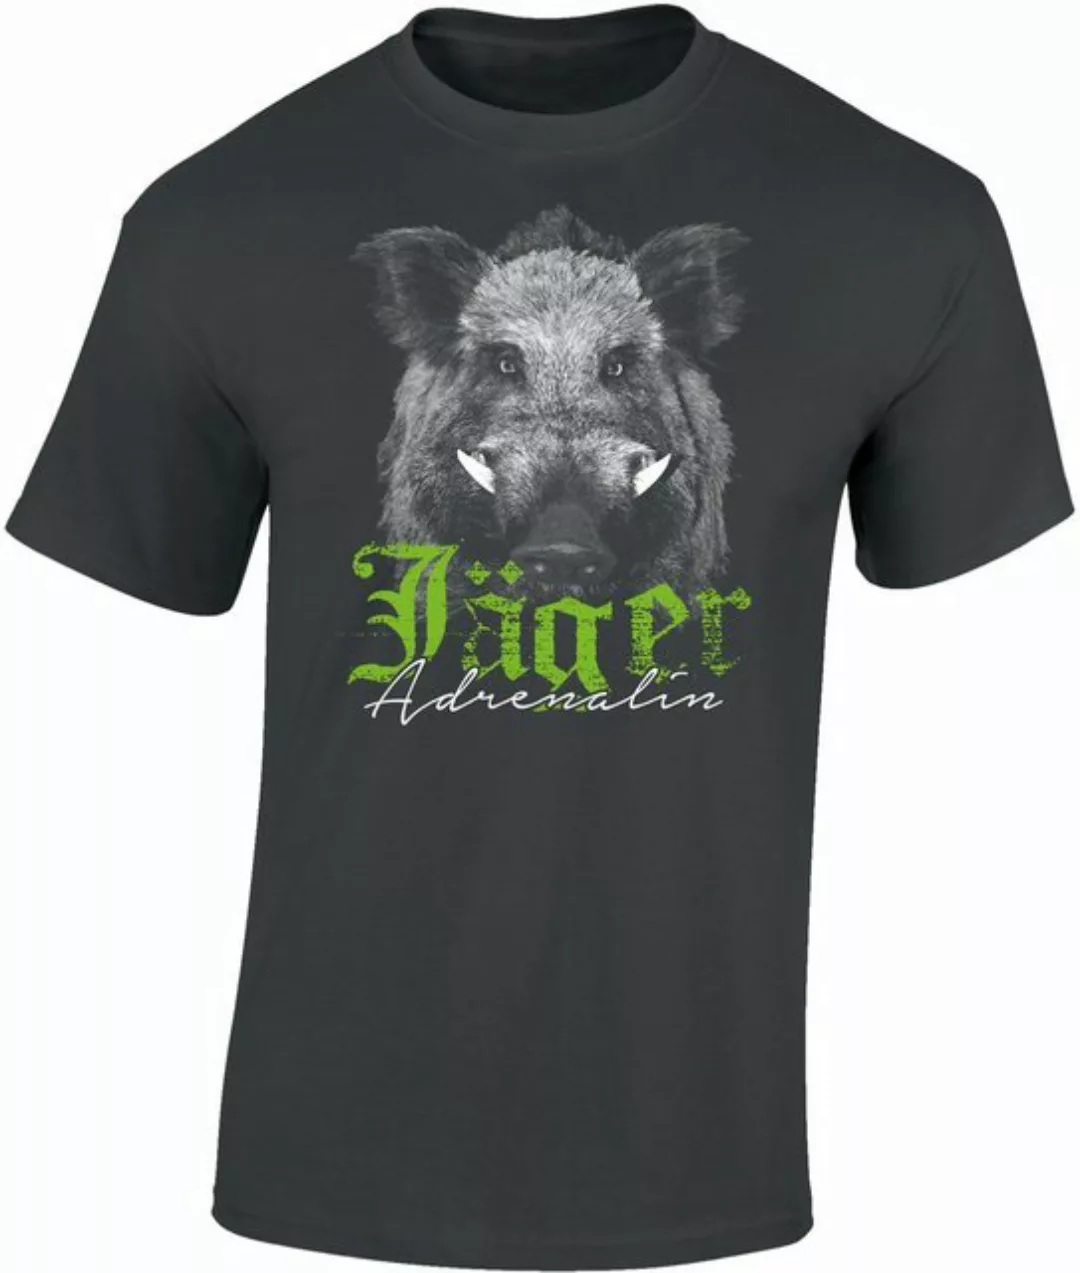 Baddery Print-Shirt Jäger T-Shirt - Jäger Adrenalin - Geschenk für Jäger - günstig online kaufen